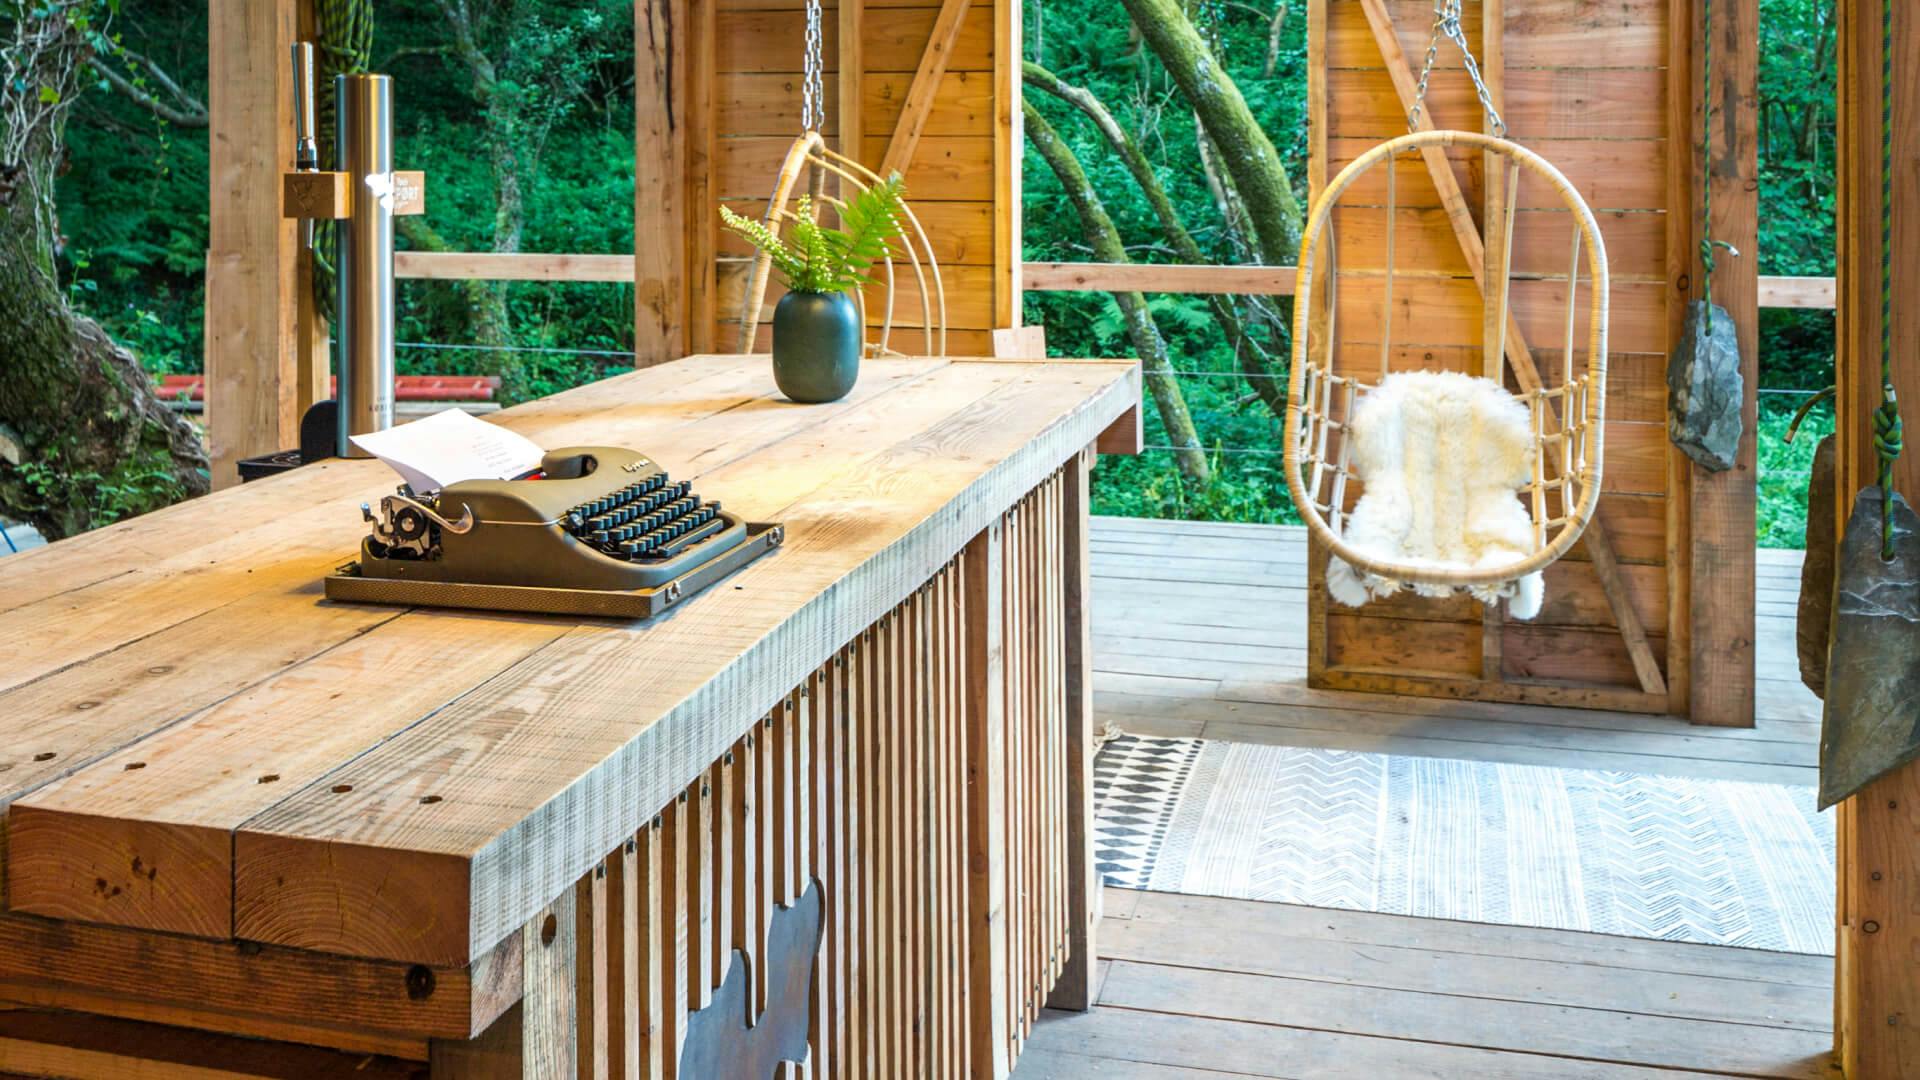 Carlsberg The Cabin - wooden worktop